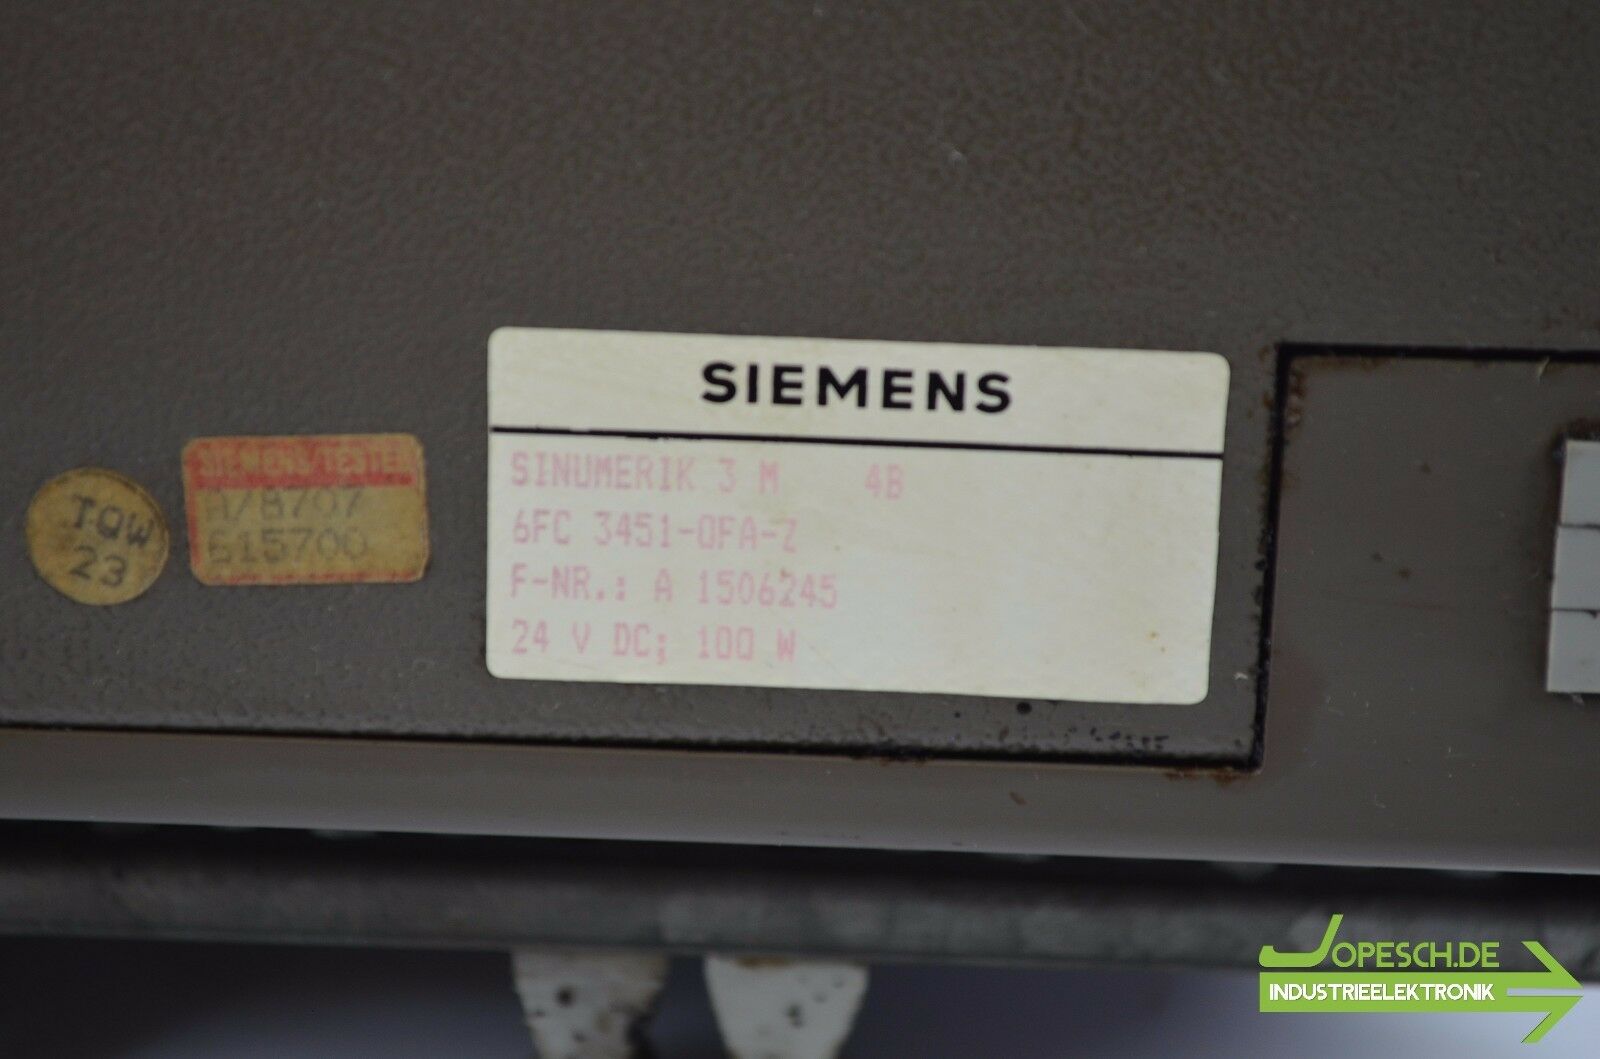 Siemens Sinumerik 6FC 3451-0FA-Z Rack